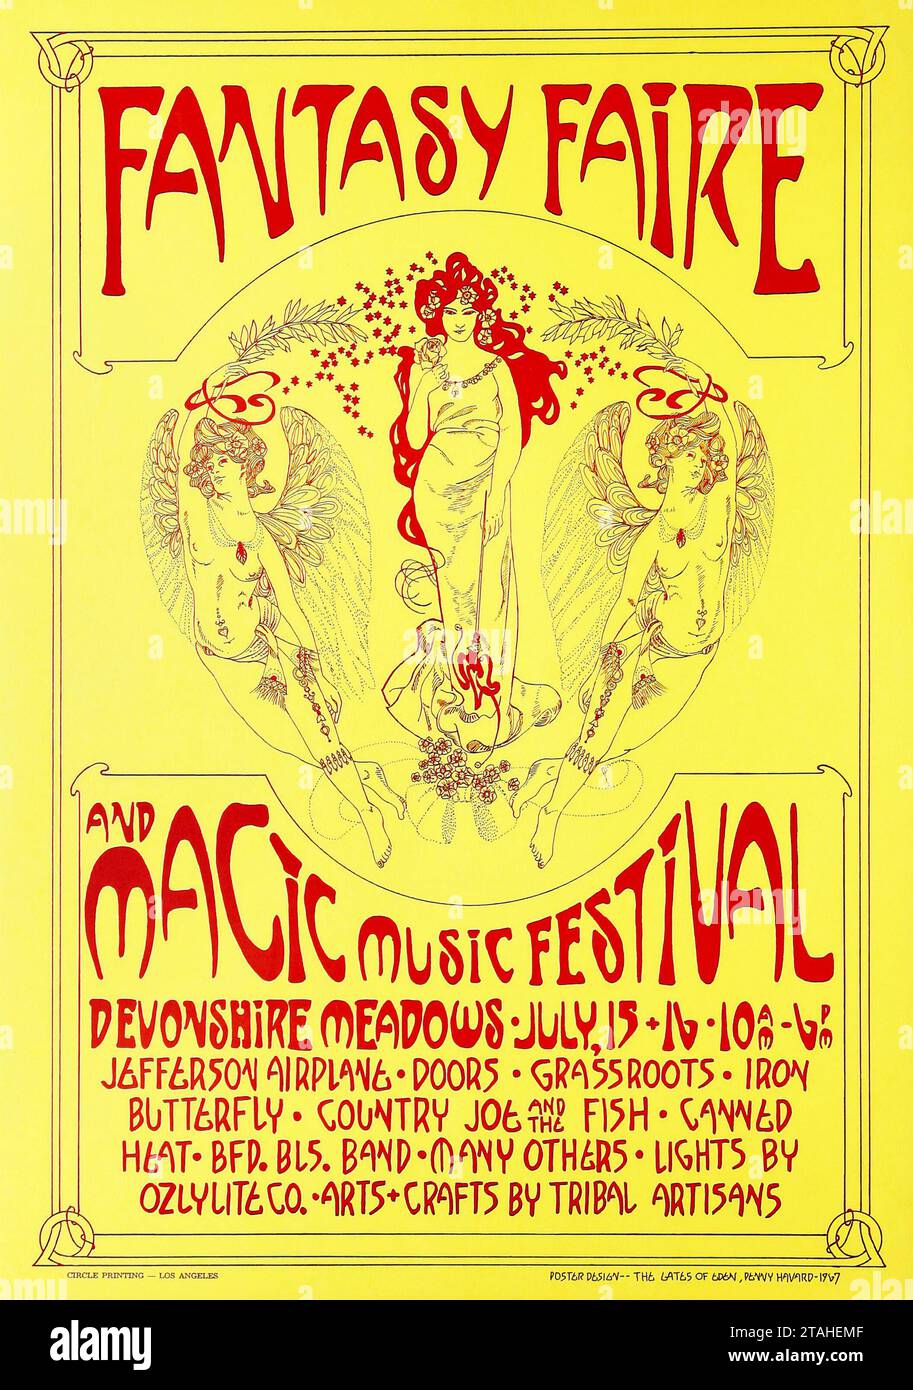 Fantasy faire und Magic Music Festival Poster (1967). Devonshire Meadows in Northridge, Kalifornien - Jefferson Airplane, Doors, Grassroots, Country Joe and the Fish, Canned Heat und vieles mehr. Stockfoto